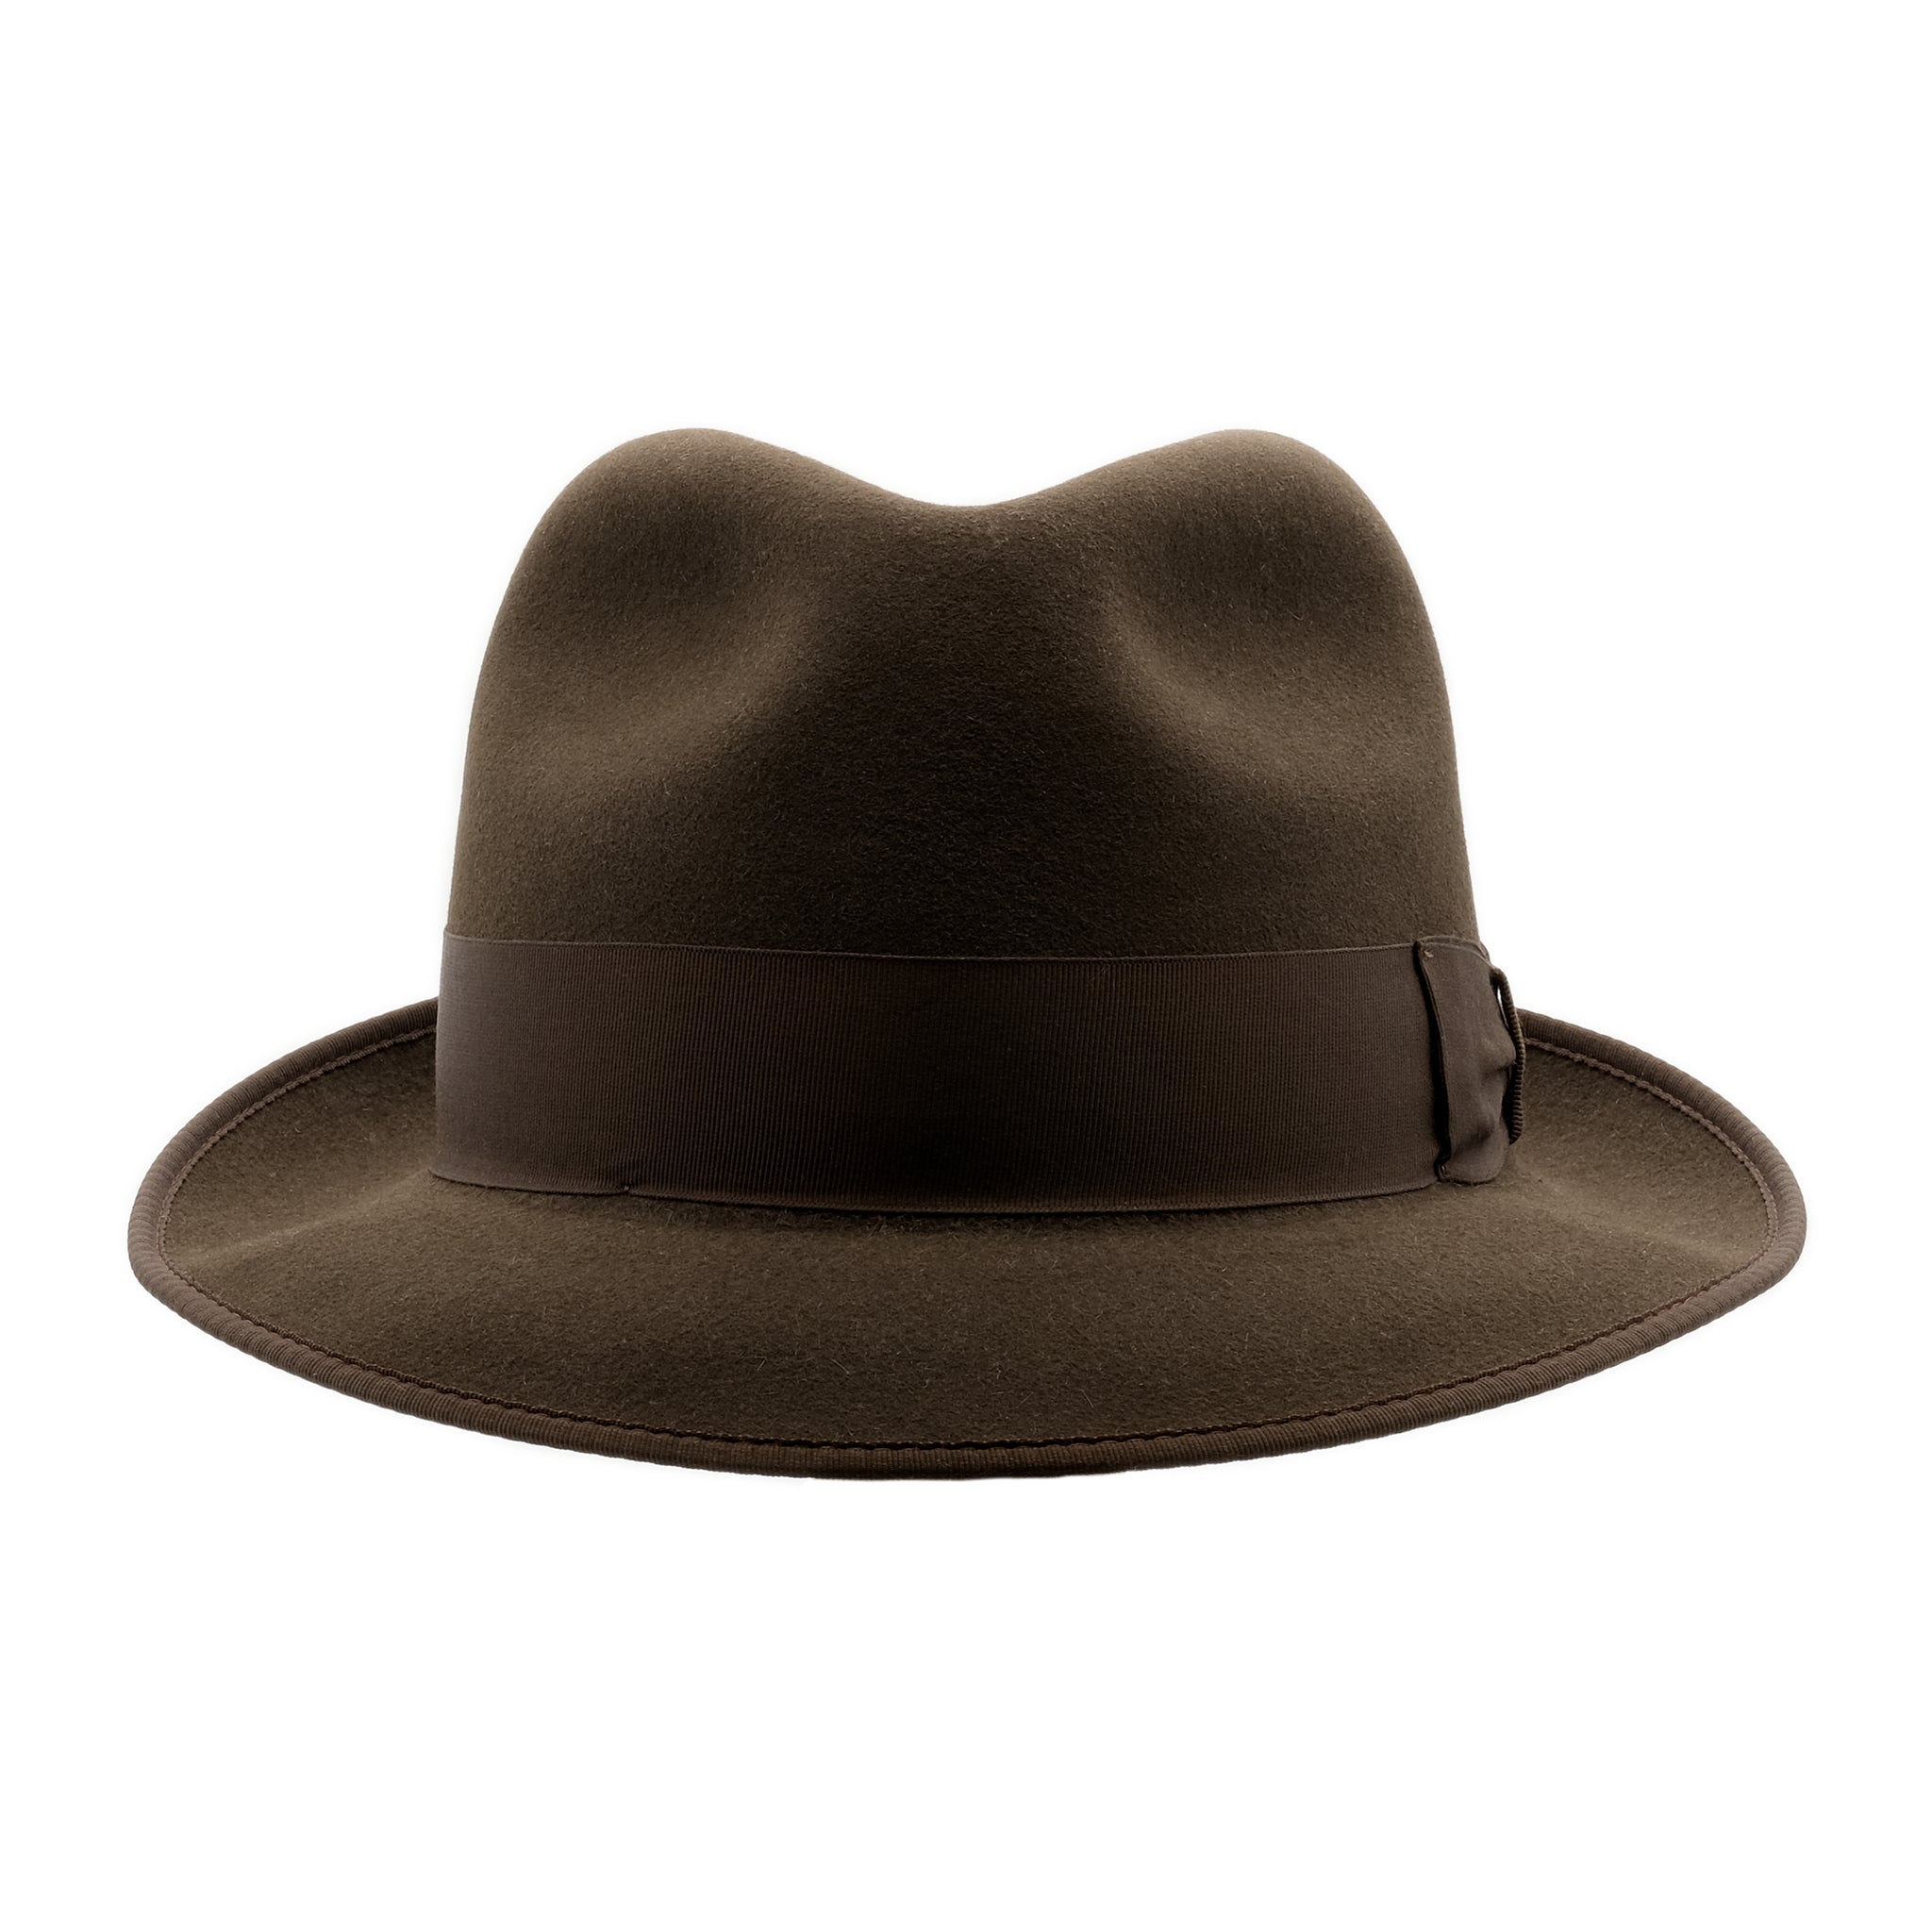 Front view of Akubra Hampton hat in Cedar Brown colour